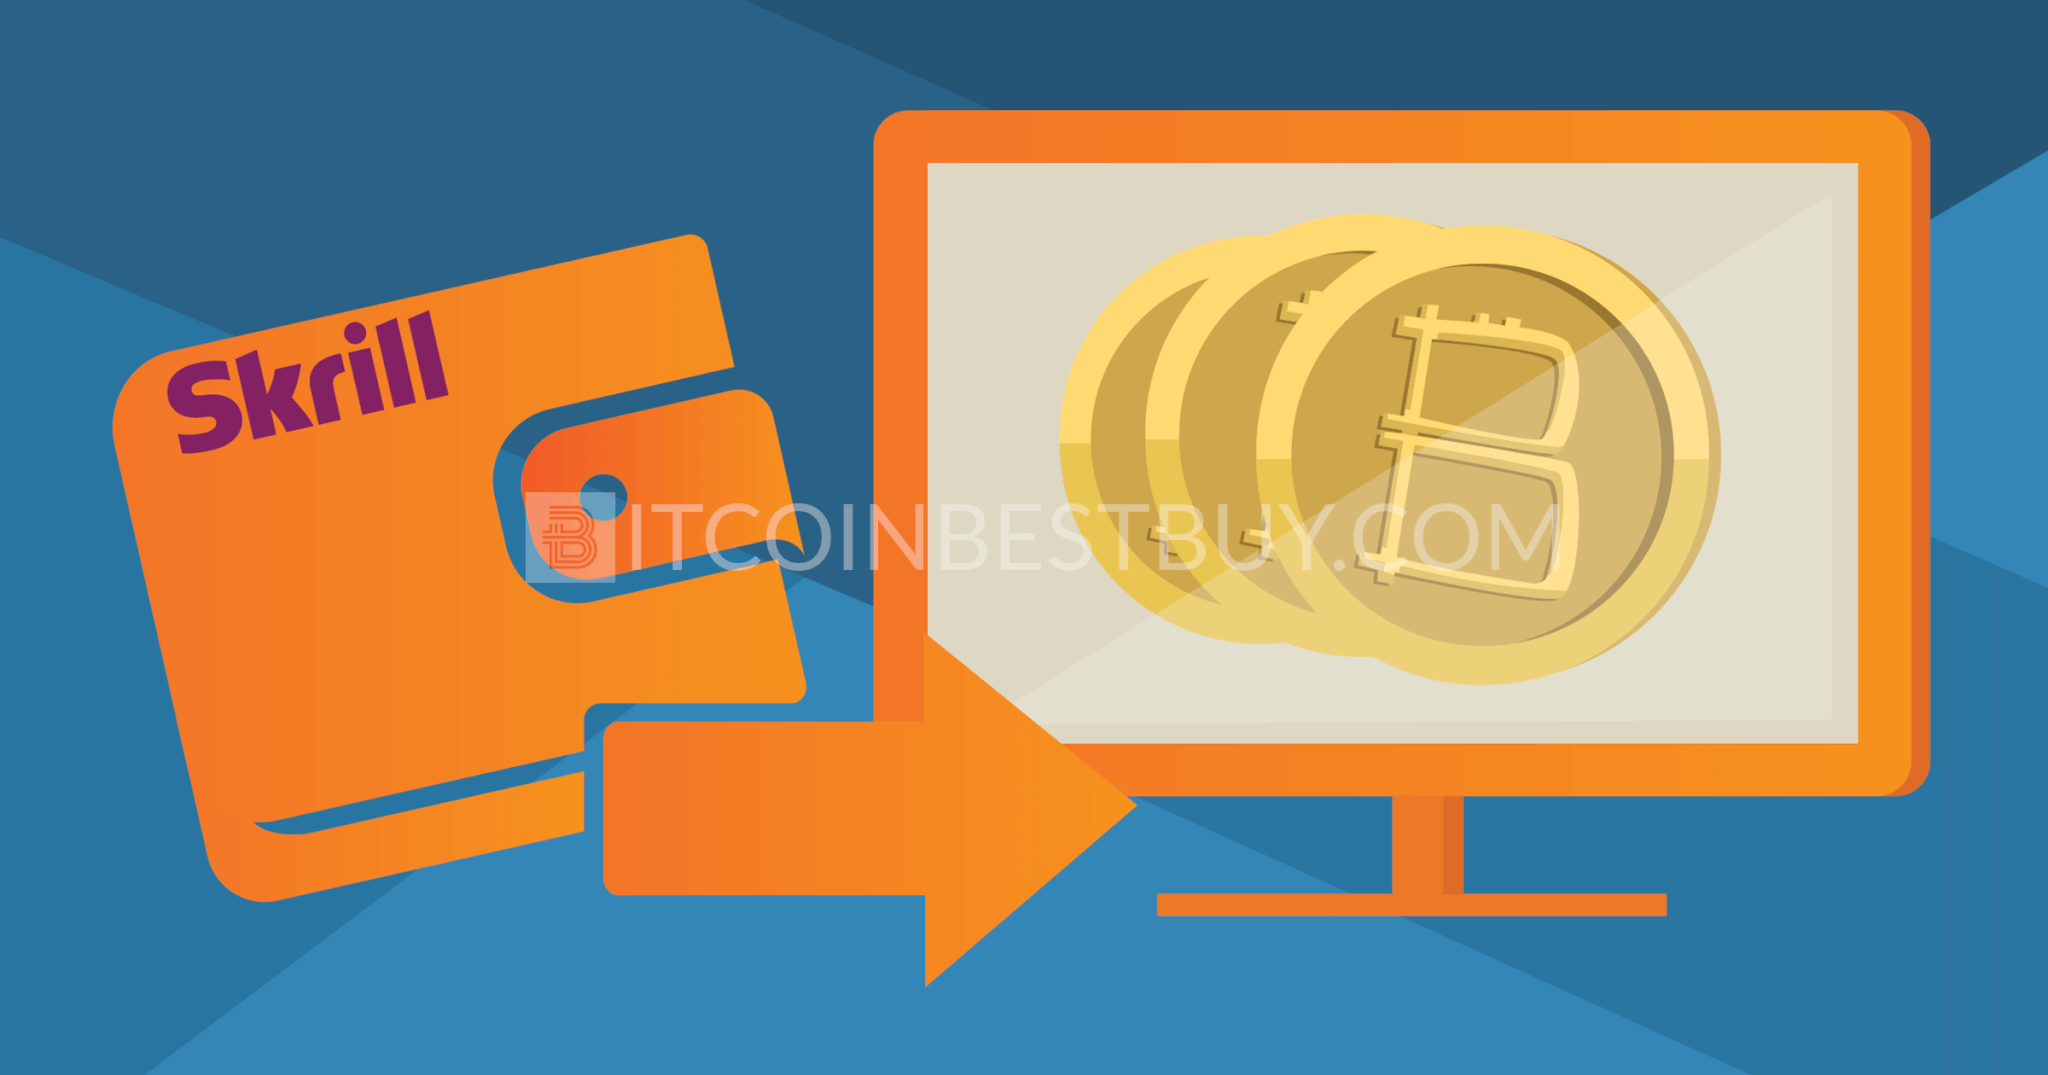 Guide To Buy Bi!   tcoins Using Skrill Via Safe Exchangers Bitcoinbestbuy - 